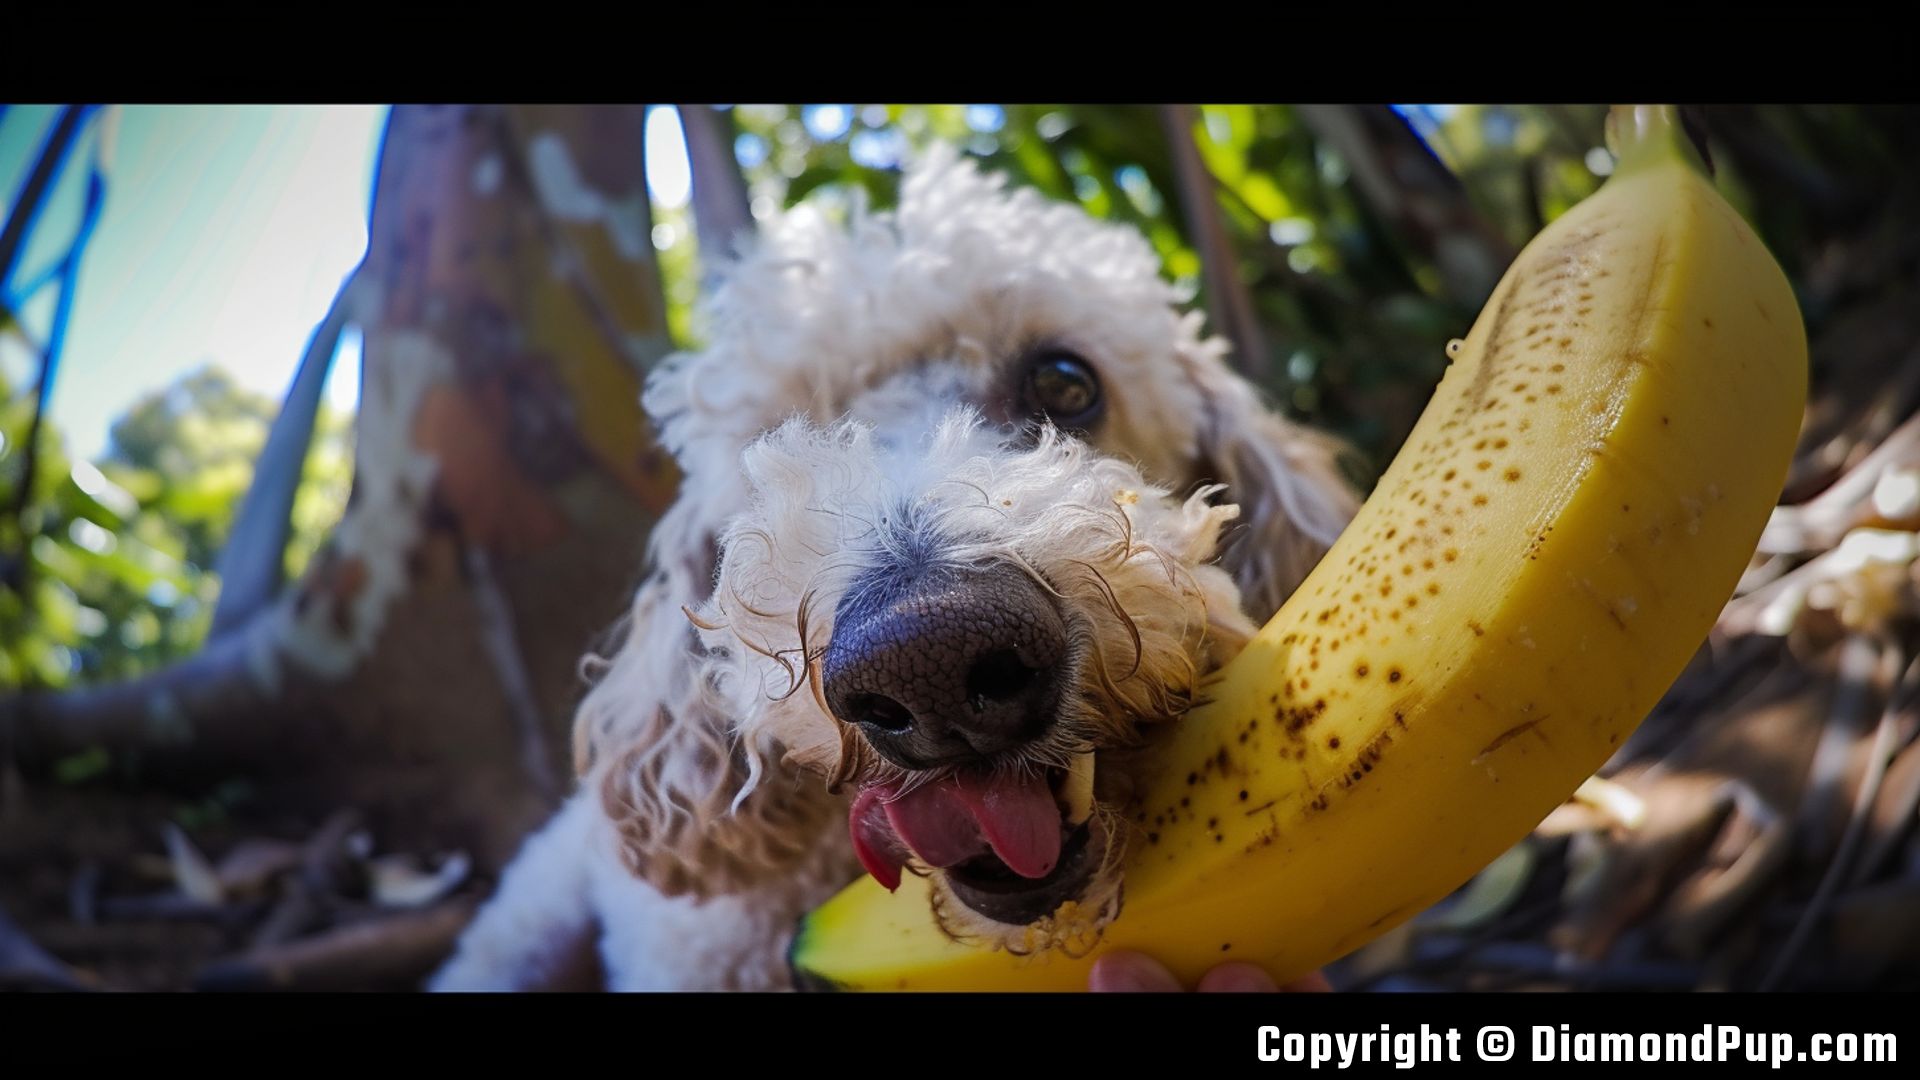 Photograph of a Cute Poodle Eating Banana